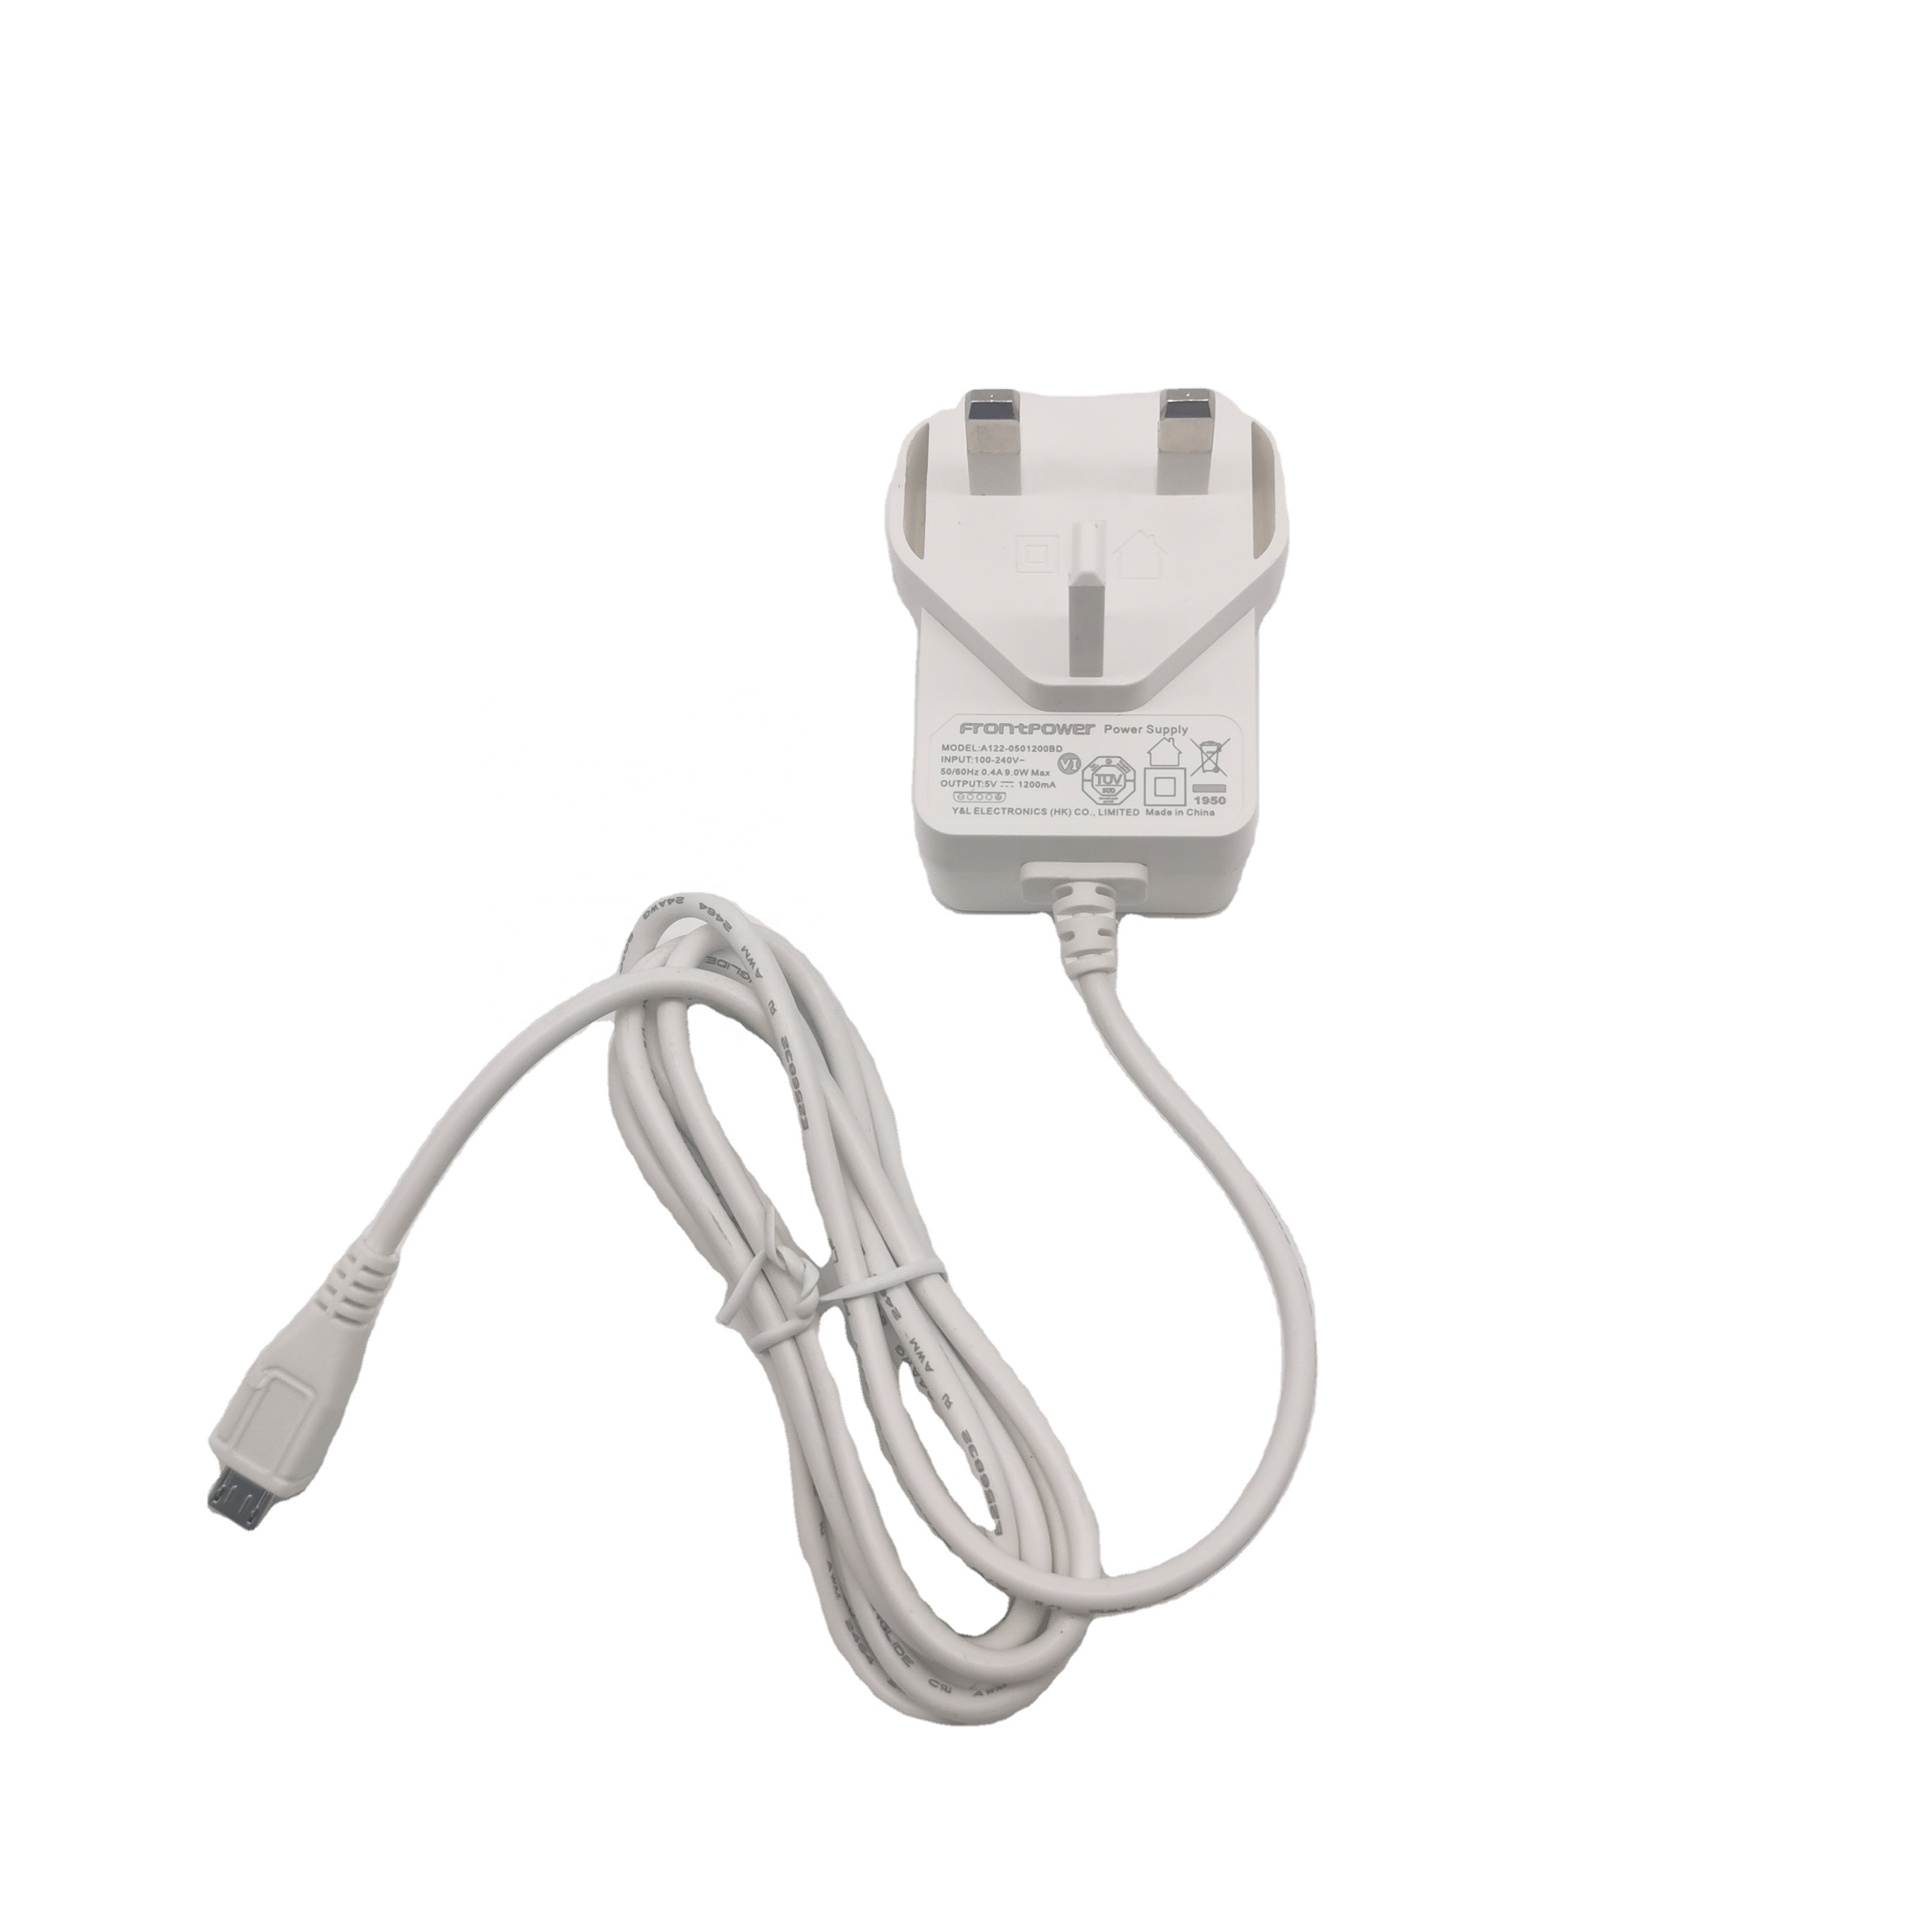 8V 1.5A wall plug medical power adapter adaptor with EN60601 MOPP certification UL60601 CE GS FCC CB SAA